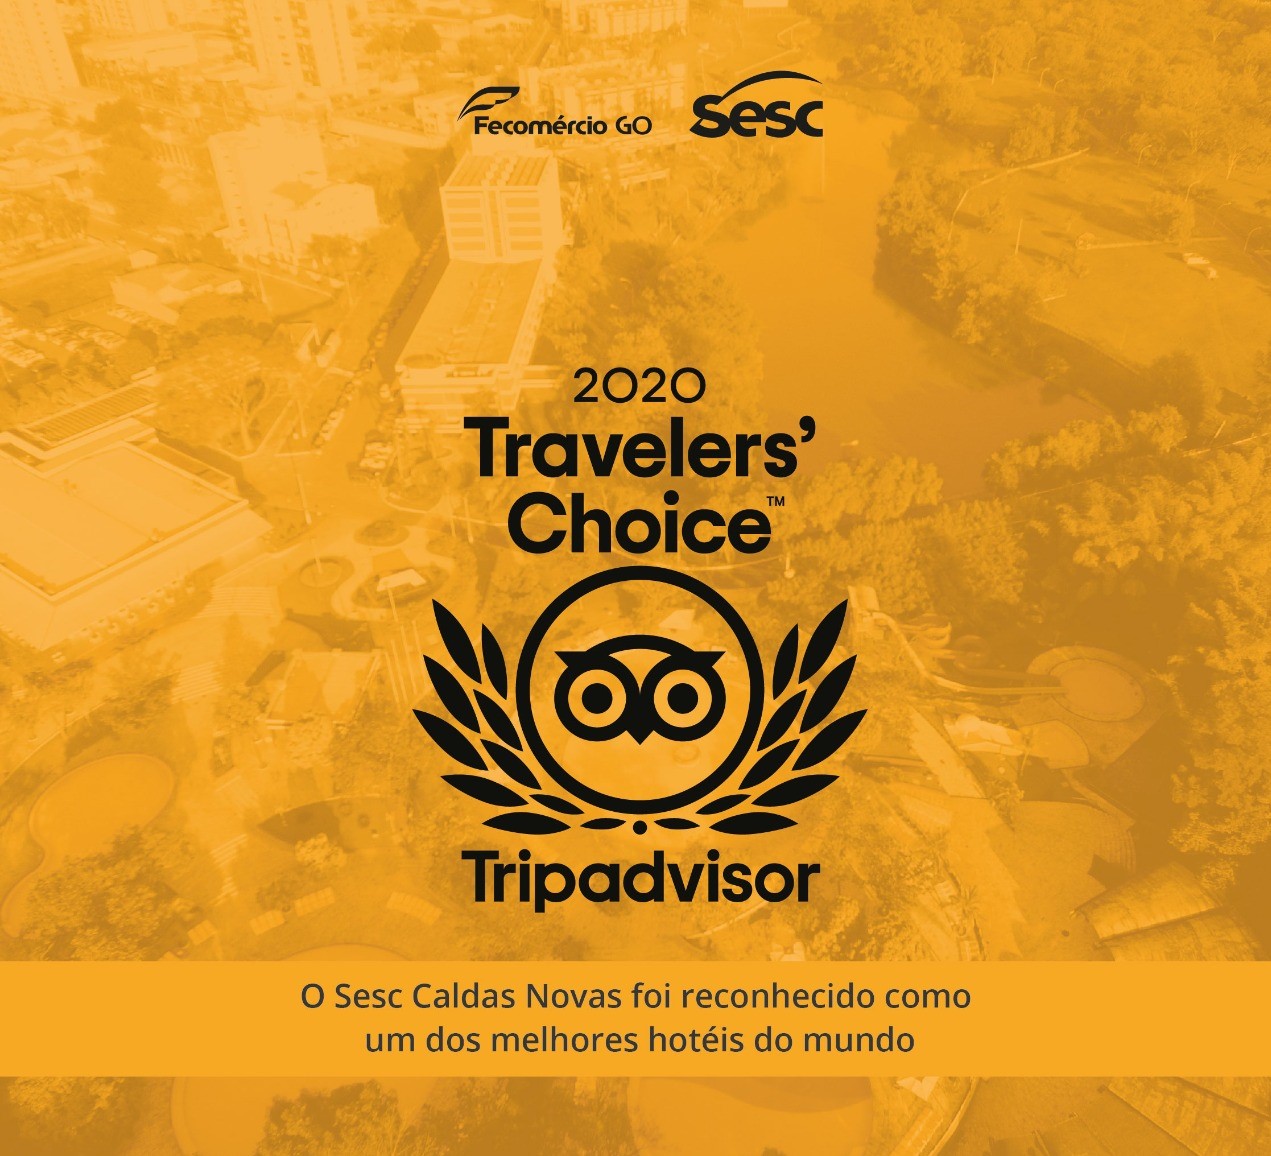 Hotéis do Sesc recebem selo Travellers' Choice - Sesc